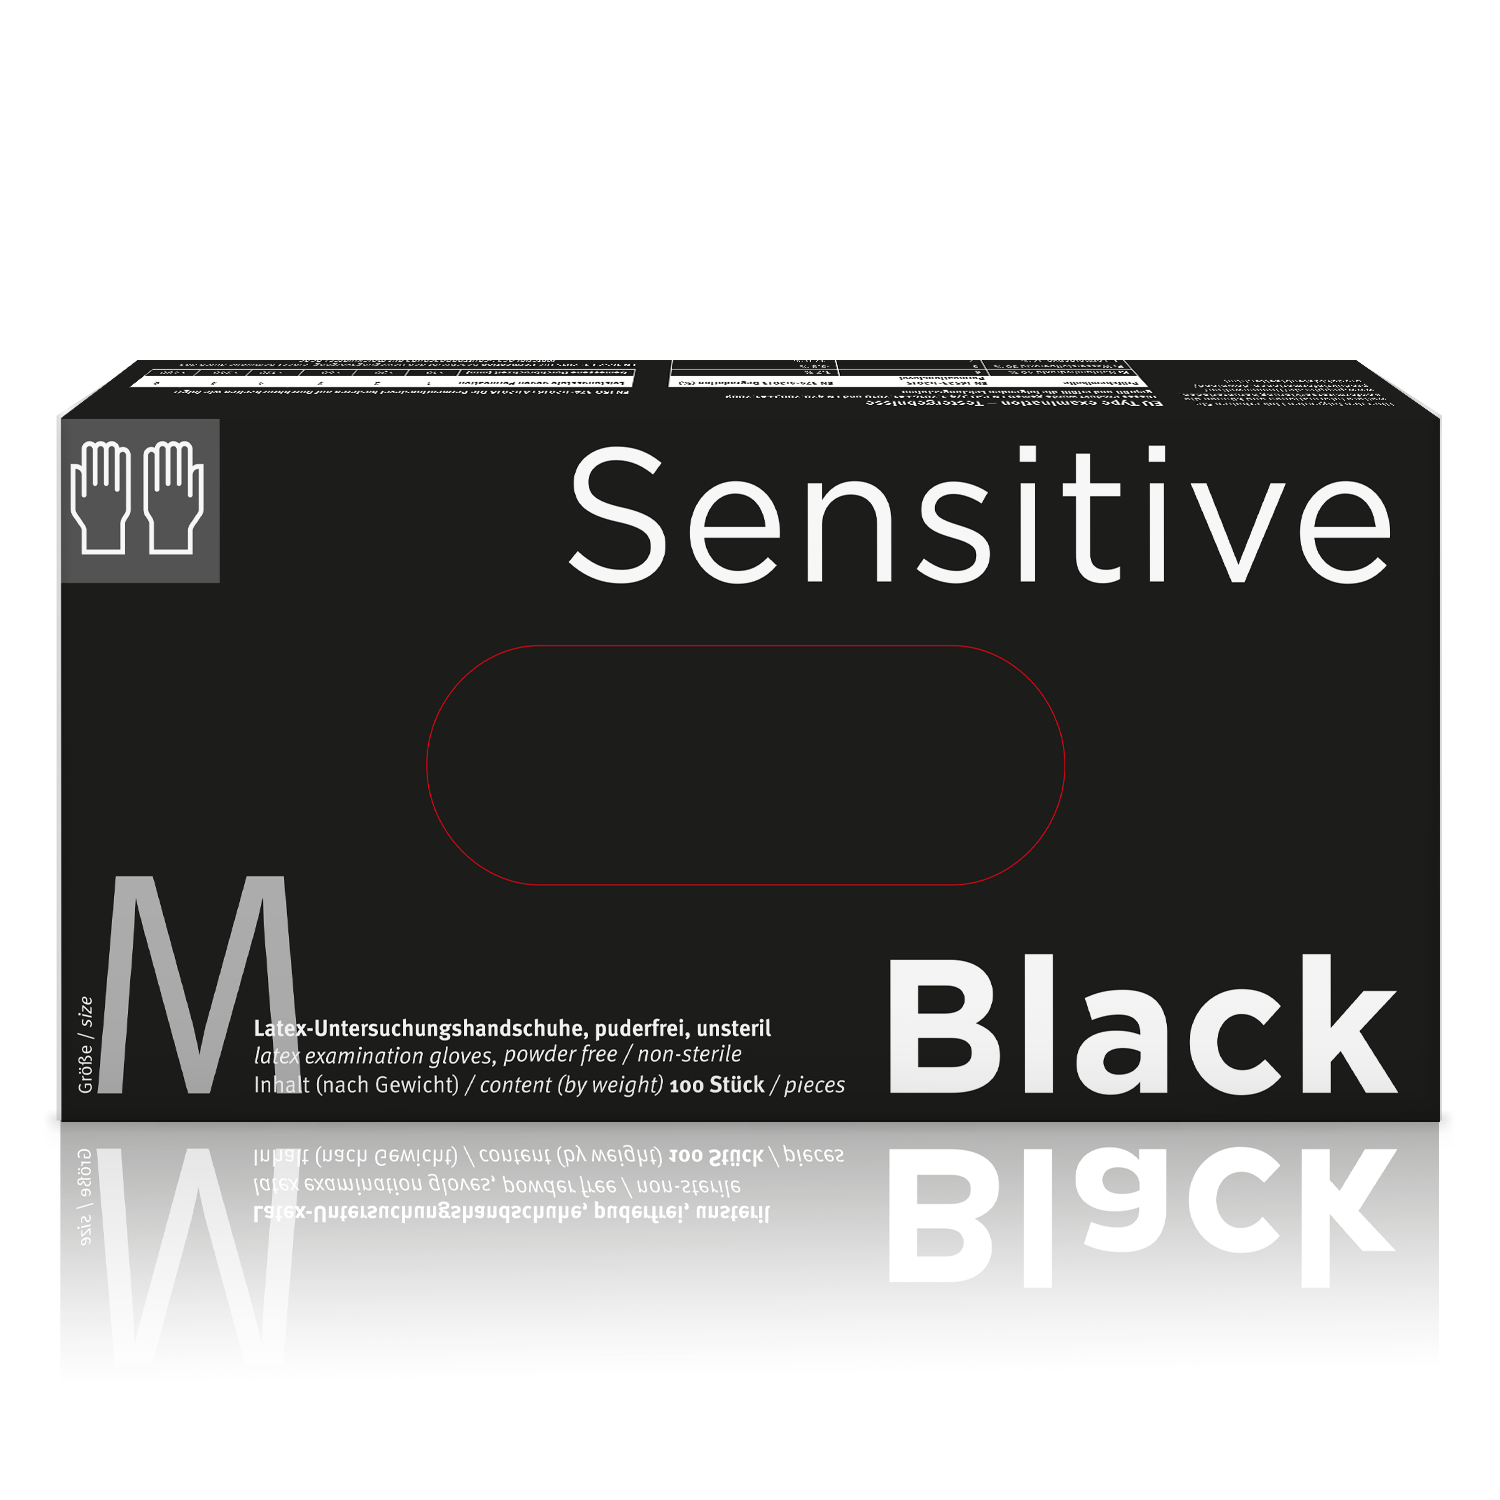 Gratis Muster Sensitive Black Latex-Handschuh volltexturiert schwarz